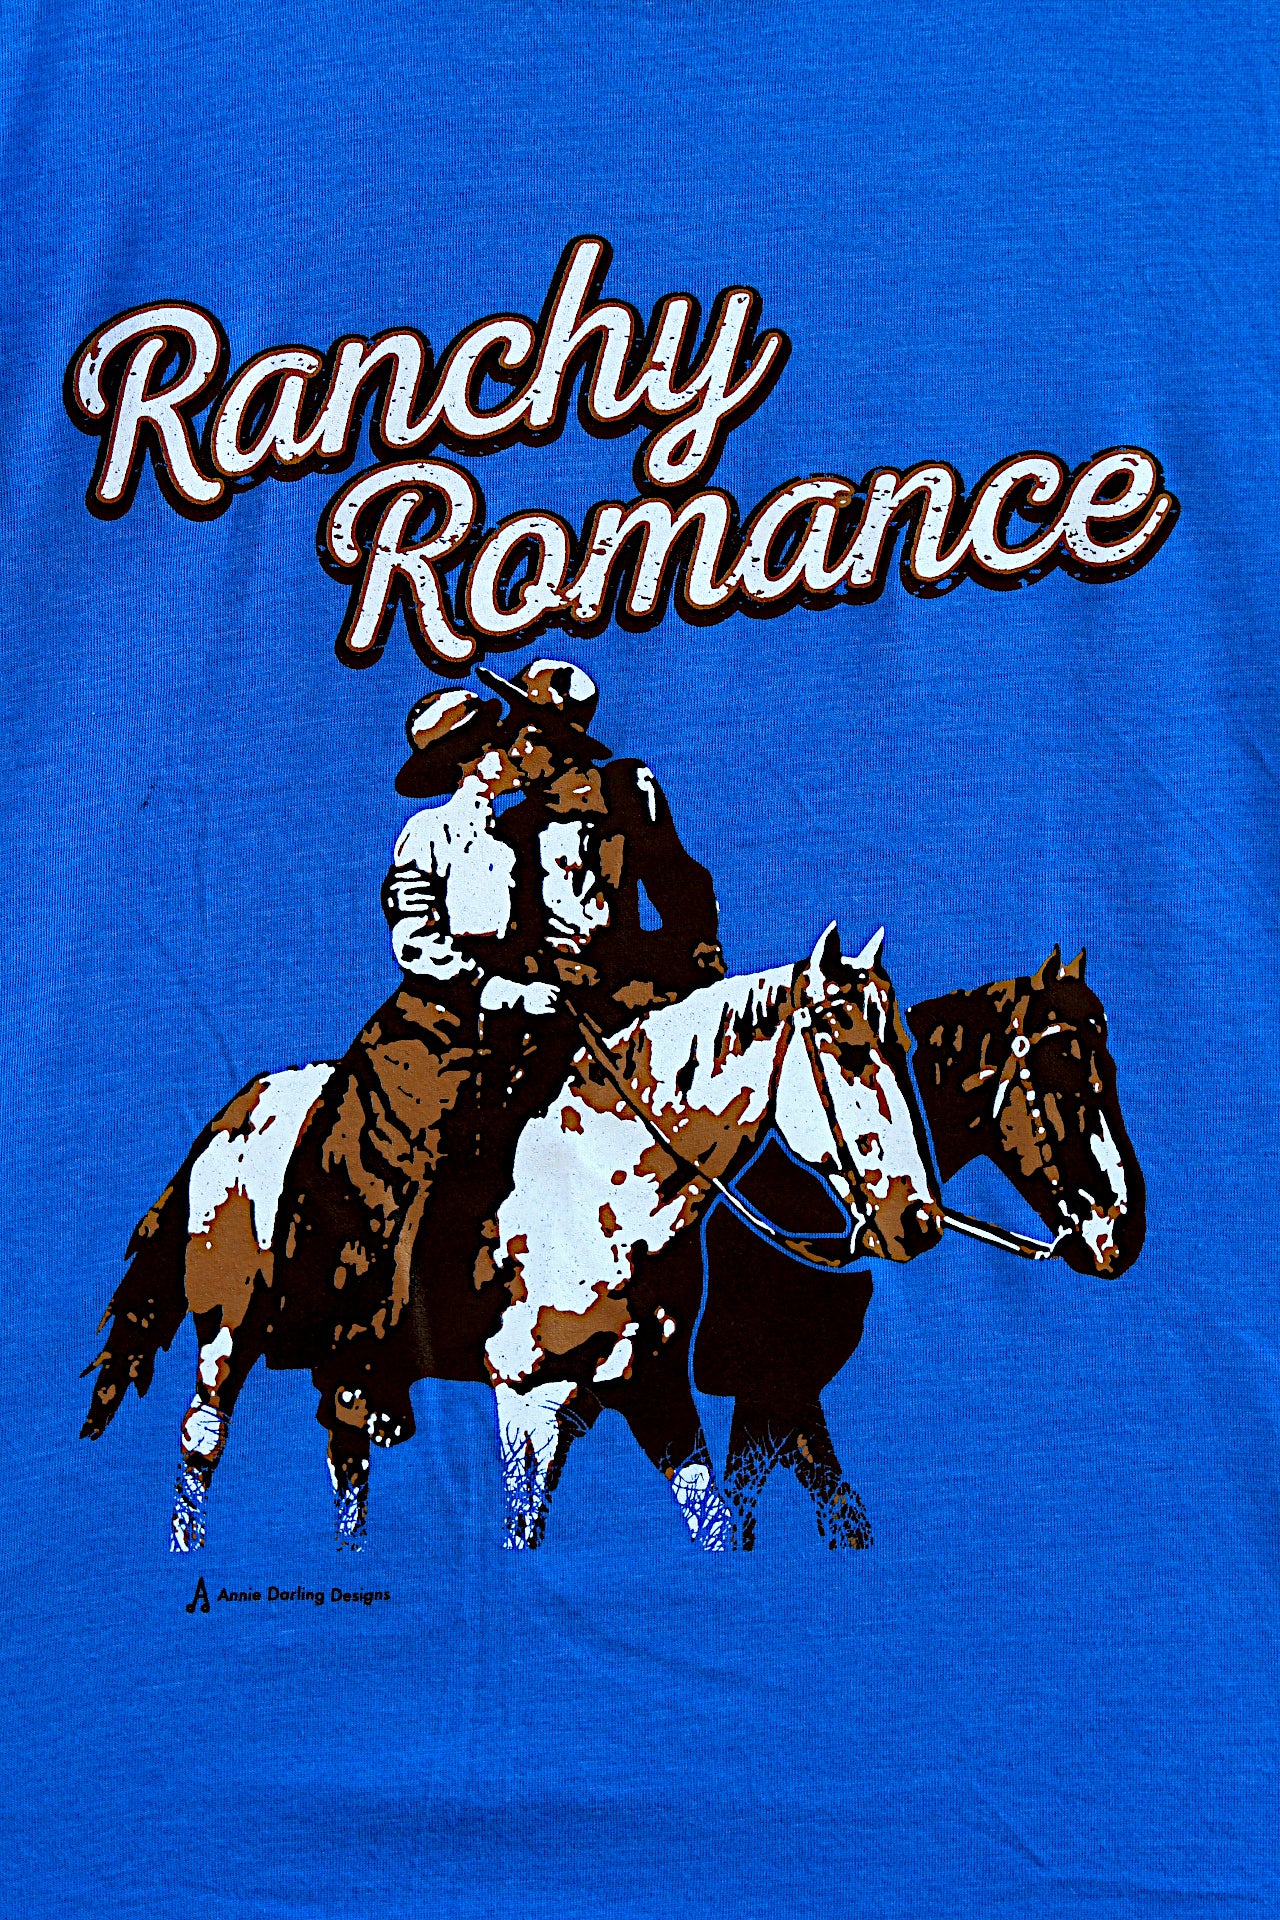 Ranchy Romance Blue T